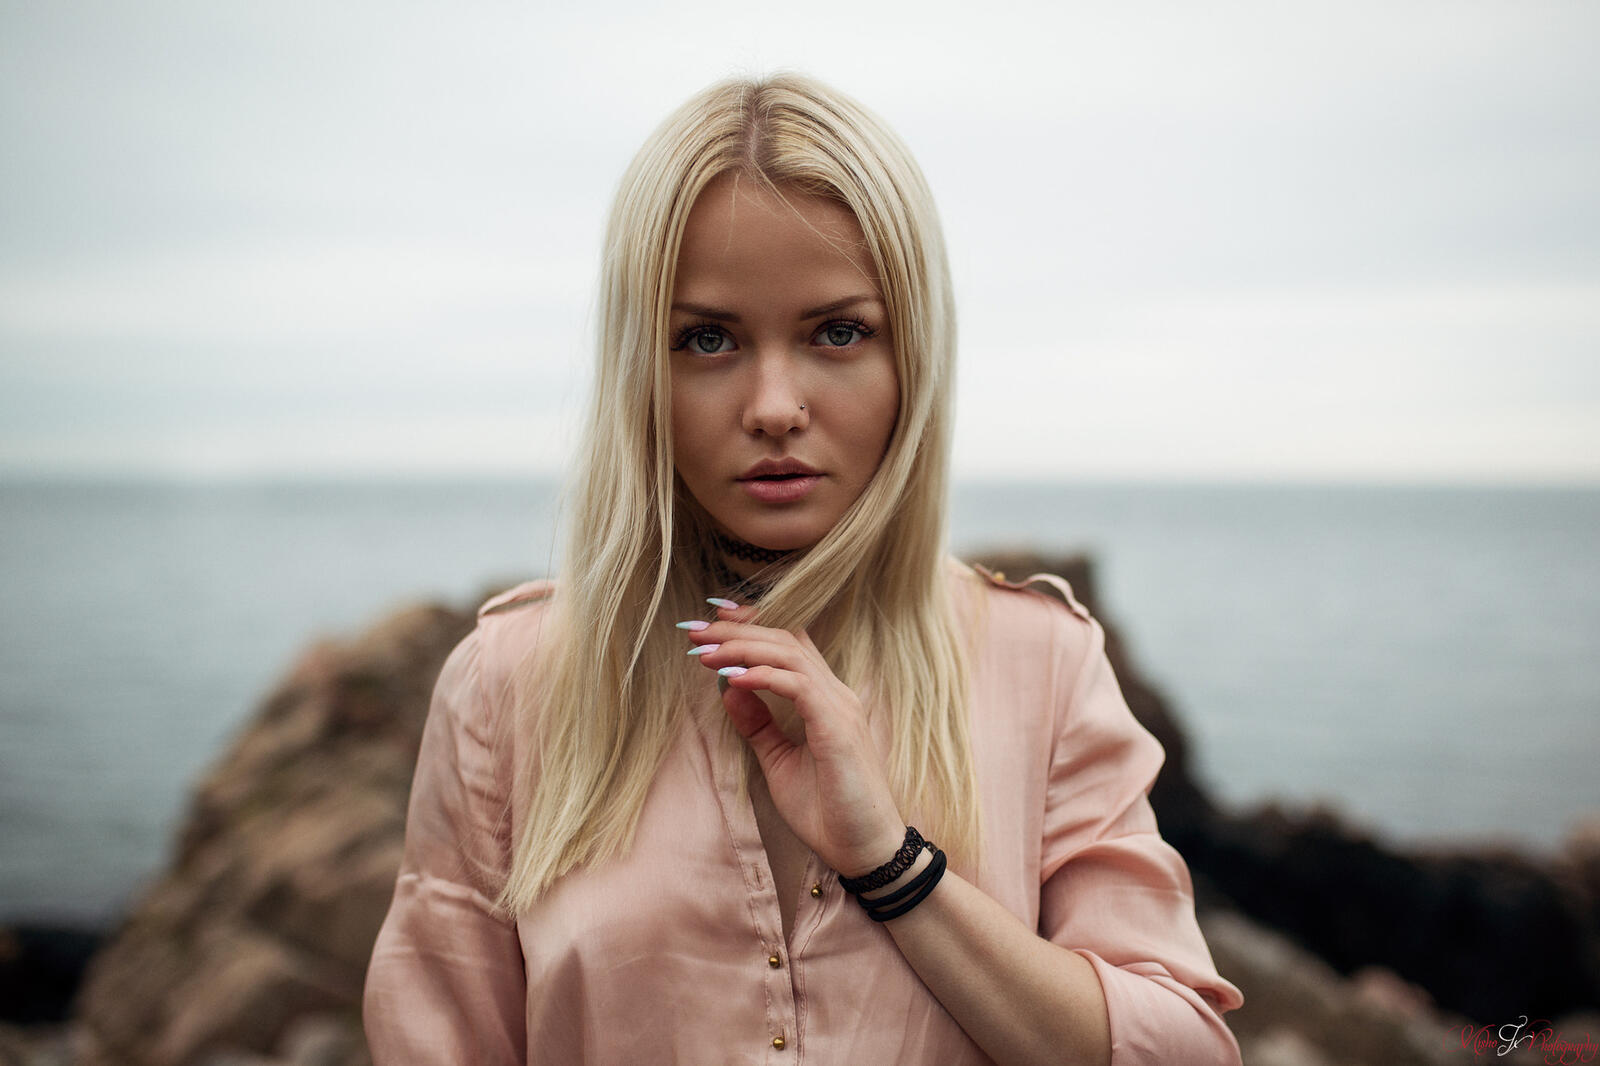 Free photo Picture of blonde Alicja Sedzielewska on the sea background